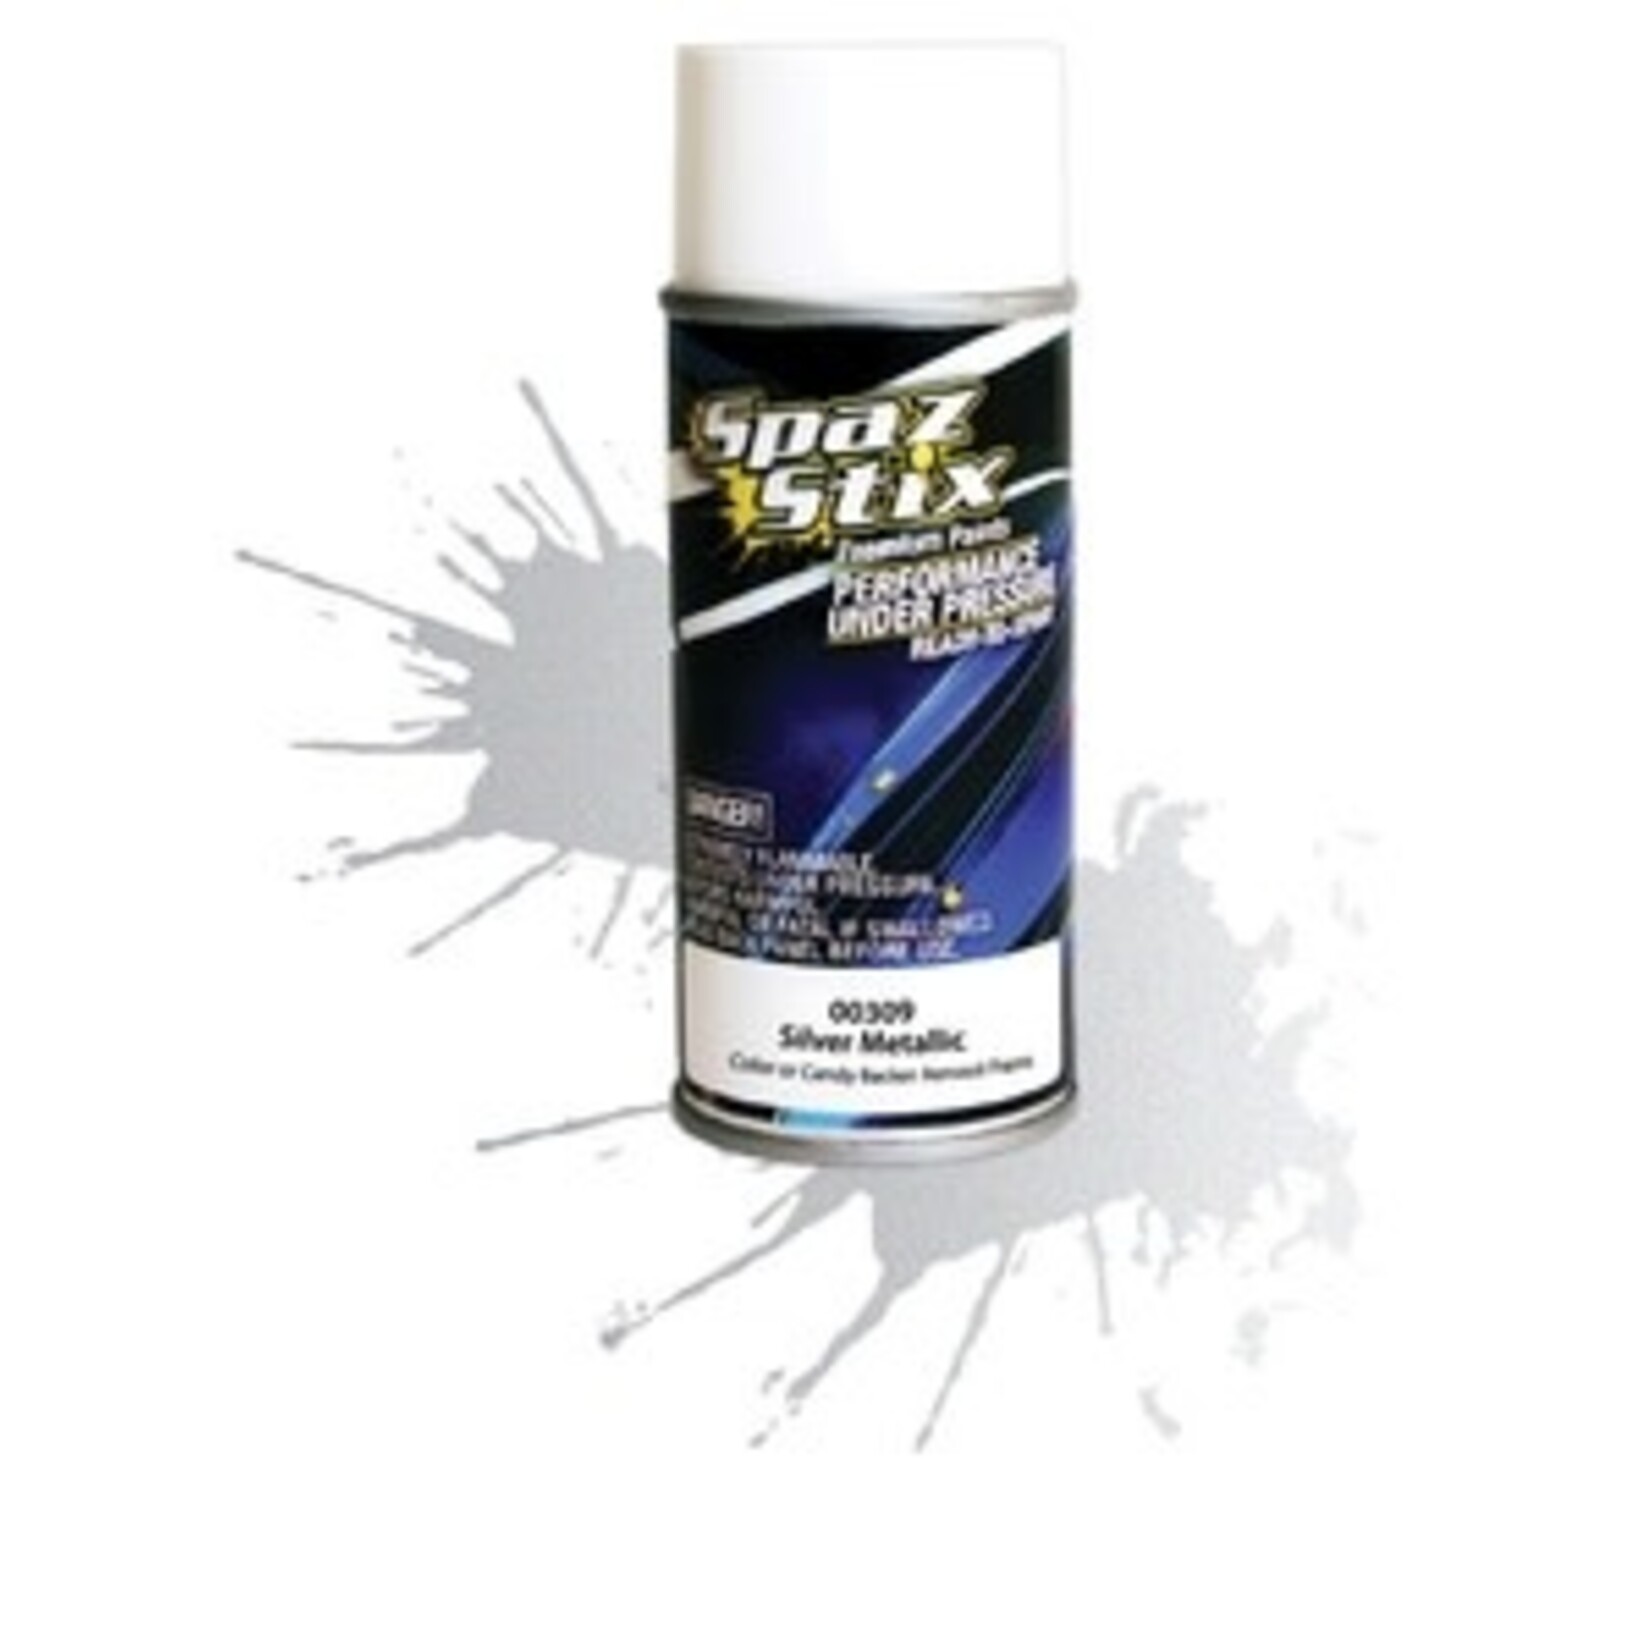 Spaz Stix Metallic Silver/"Candy" Backer, Aerosol Paint, 3.5oz Bottle